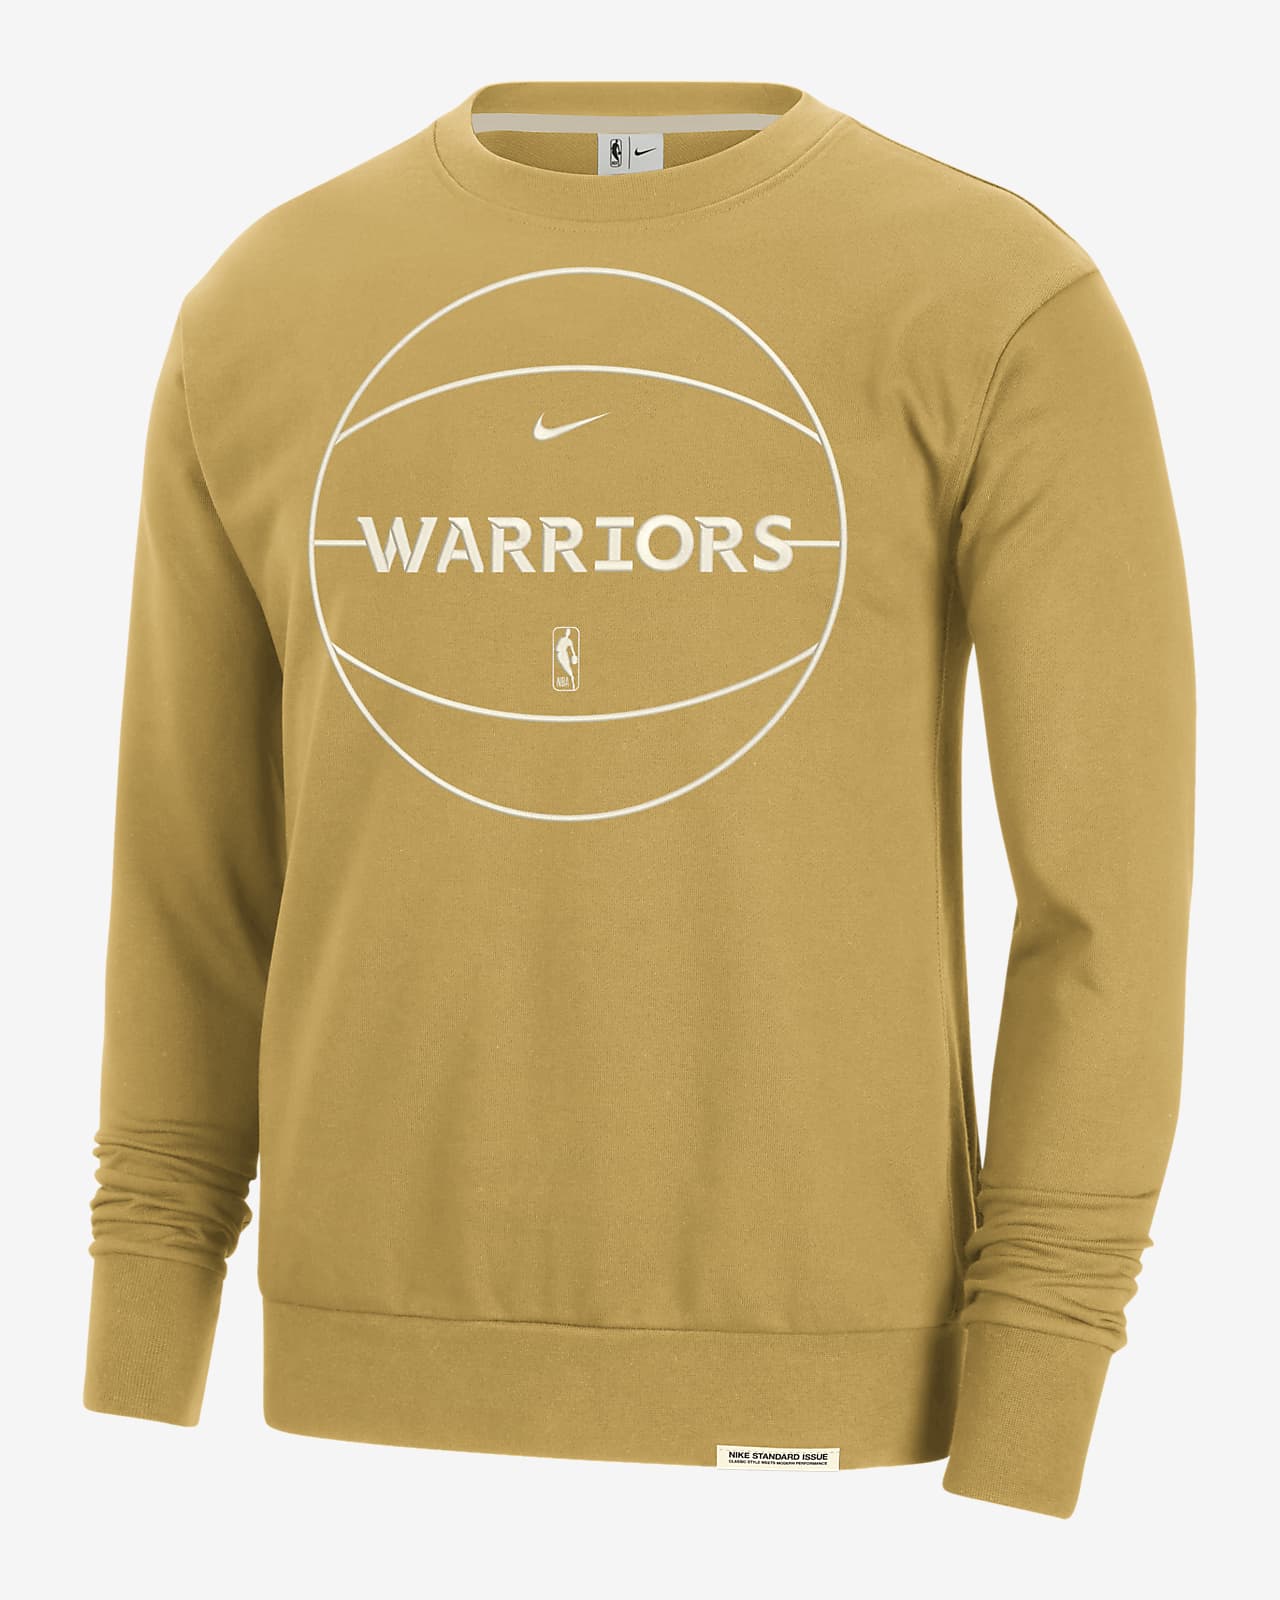 Golden State Warriors Standard Issue Men's Nike Dri-FIT NBA Sweatshirt.